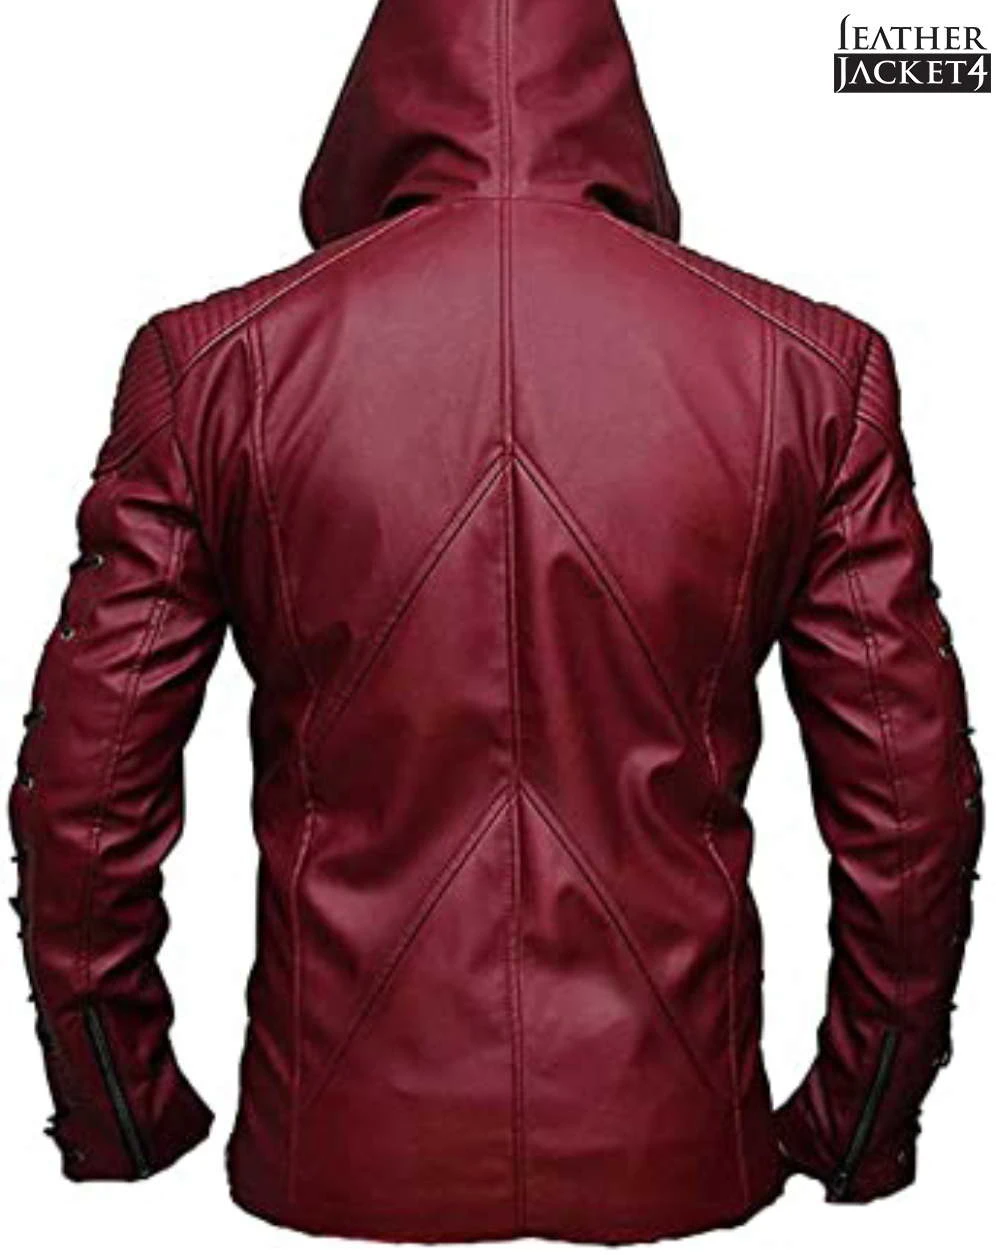 Buy Colton Haynes Leather Jacket